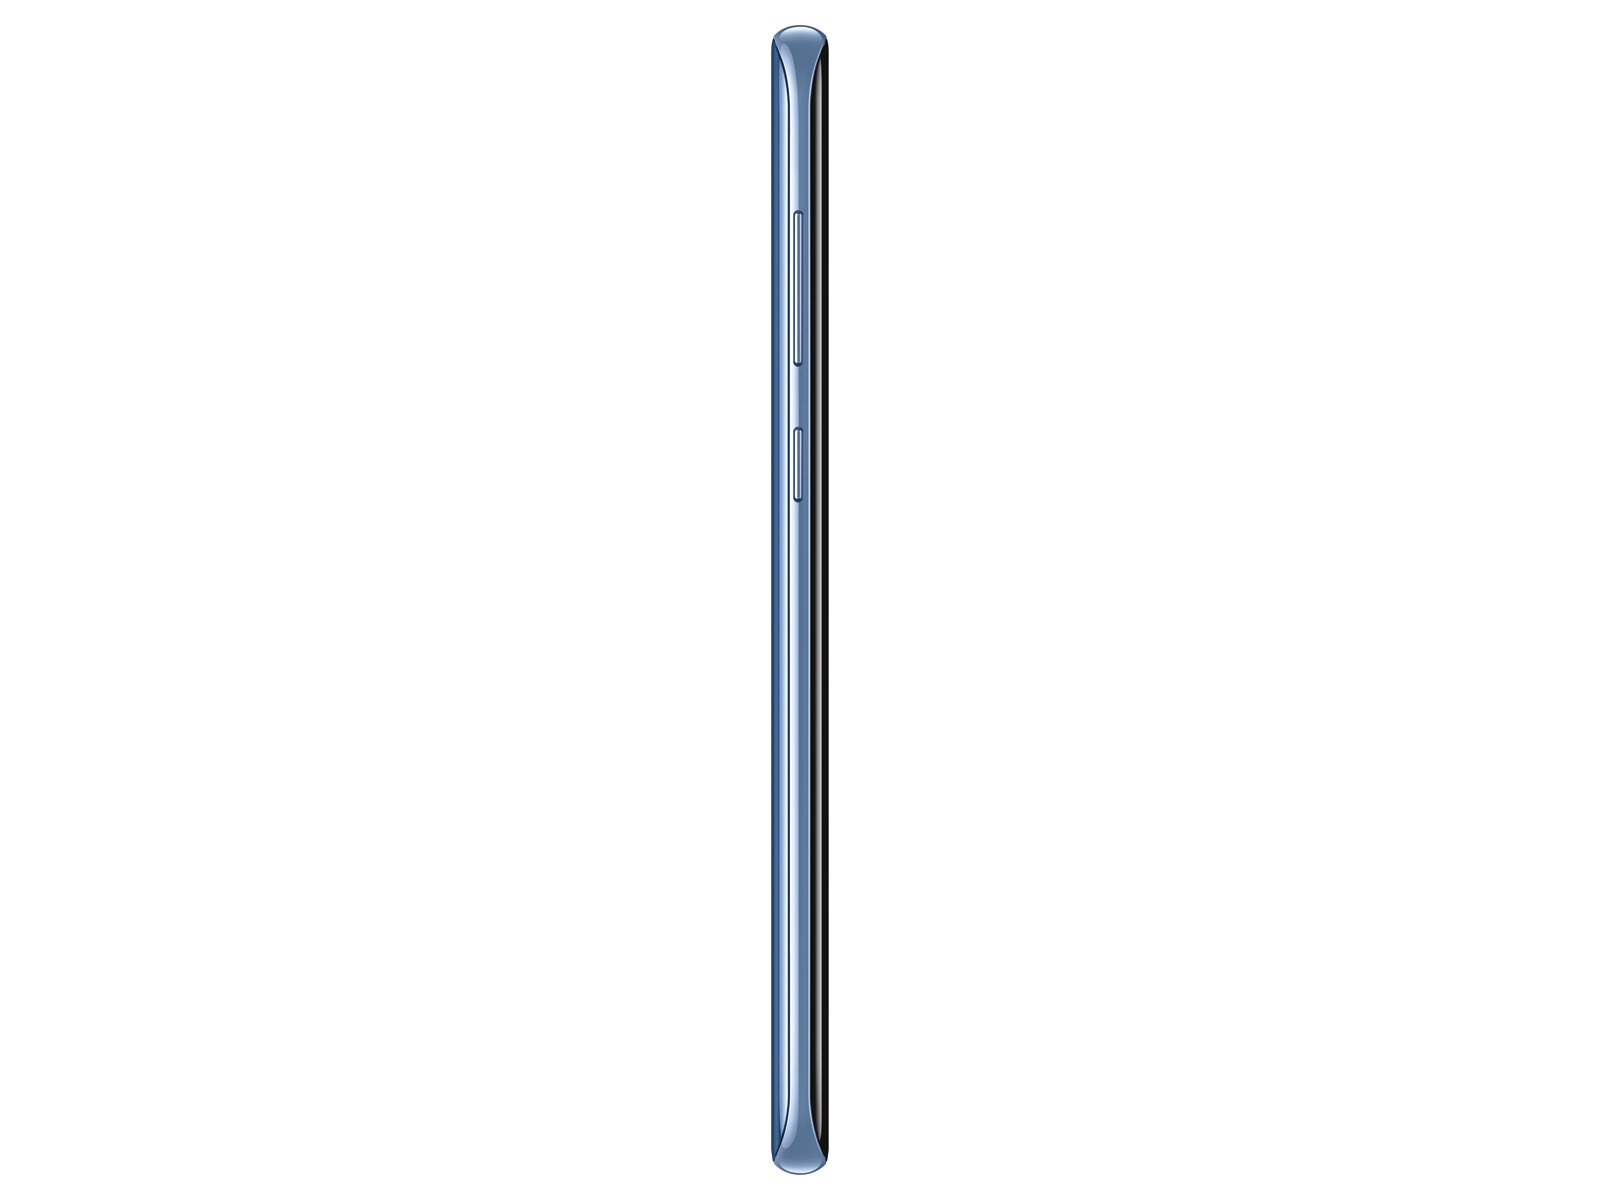 Thumbnail image of Galaxy S8+ 64GB (Unlocked)